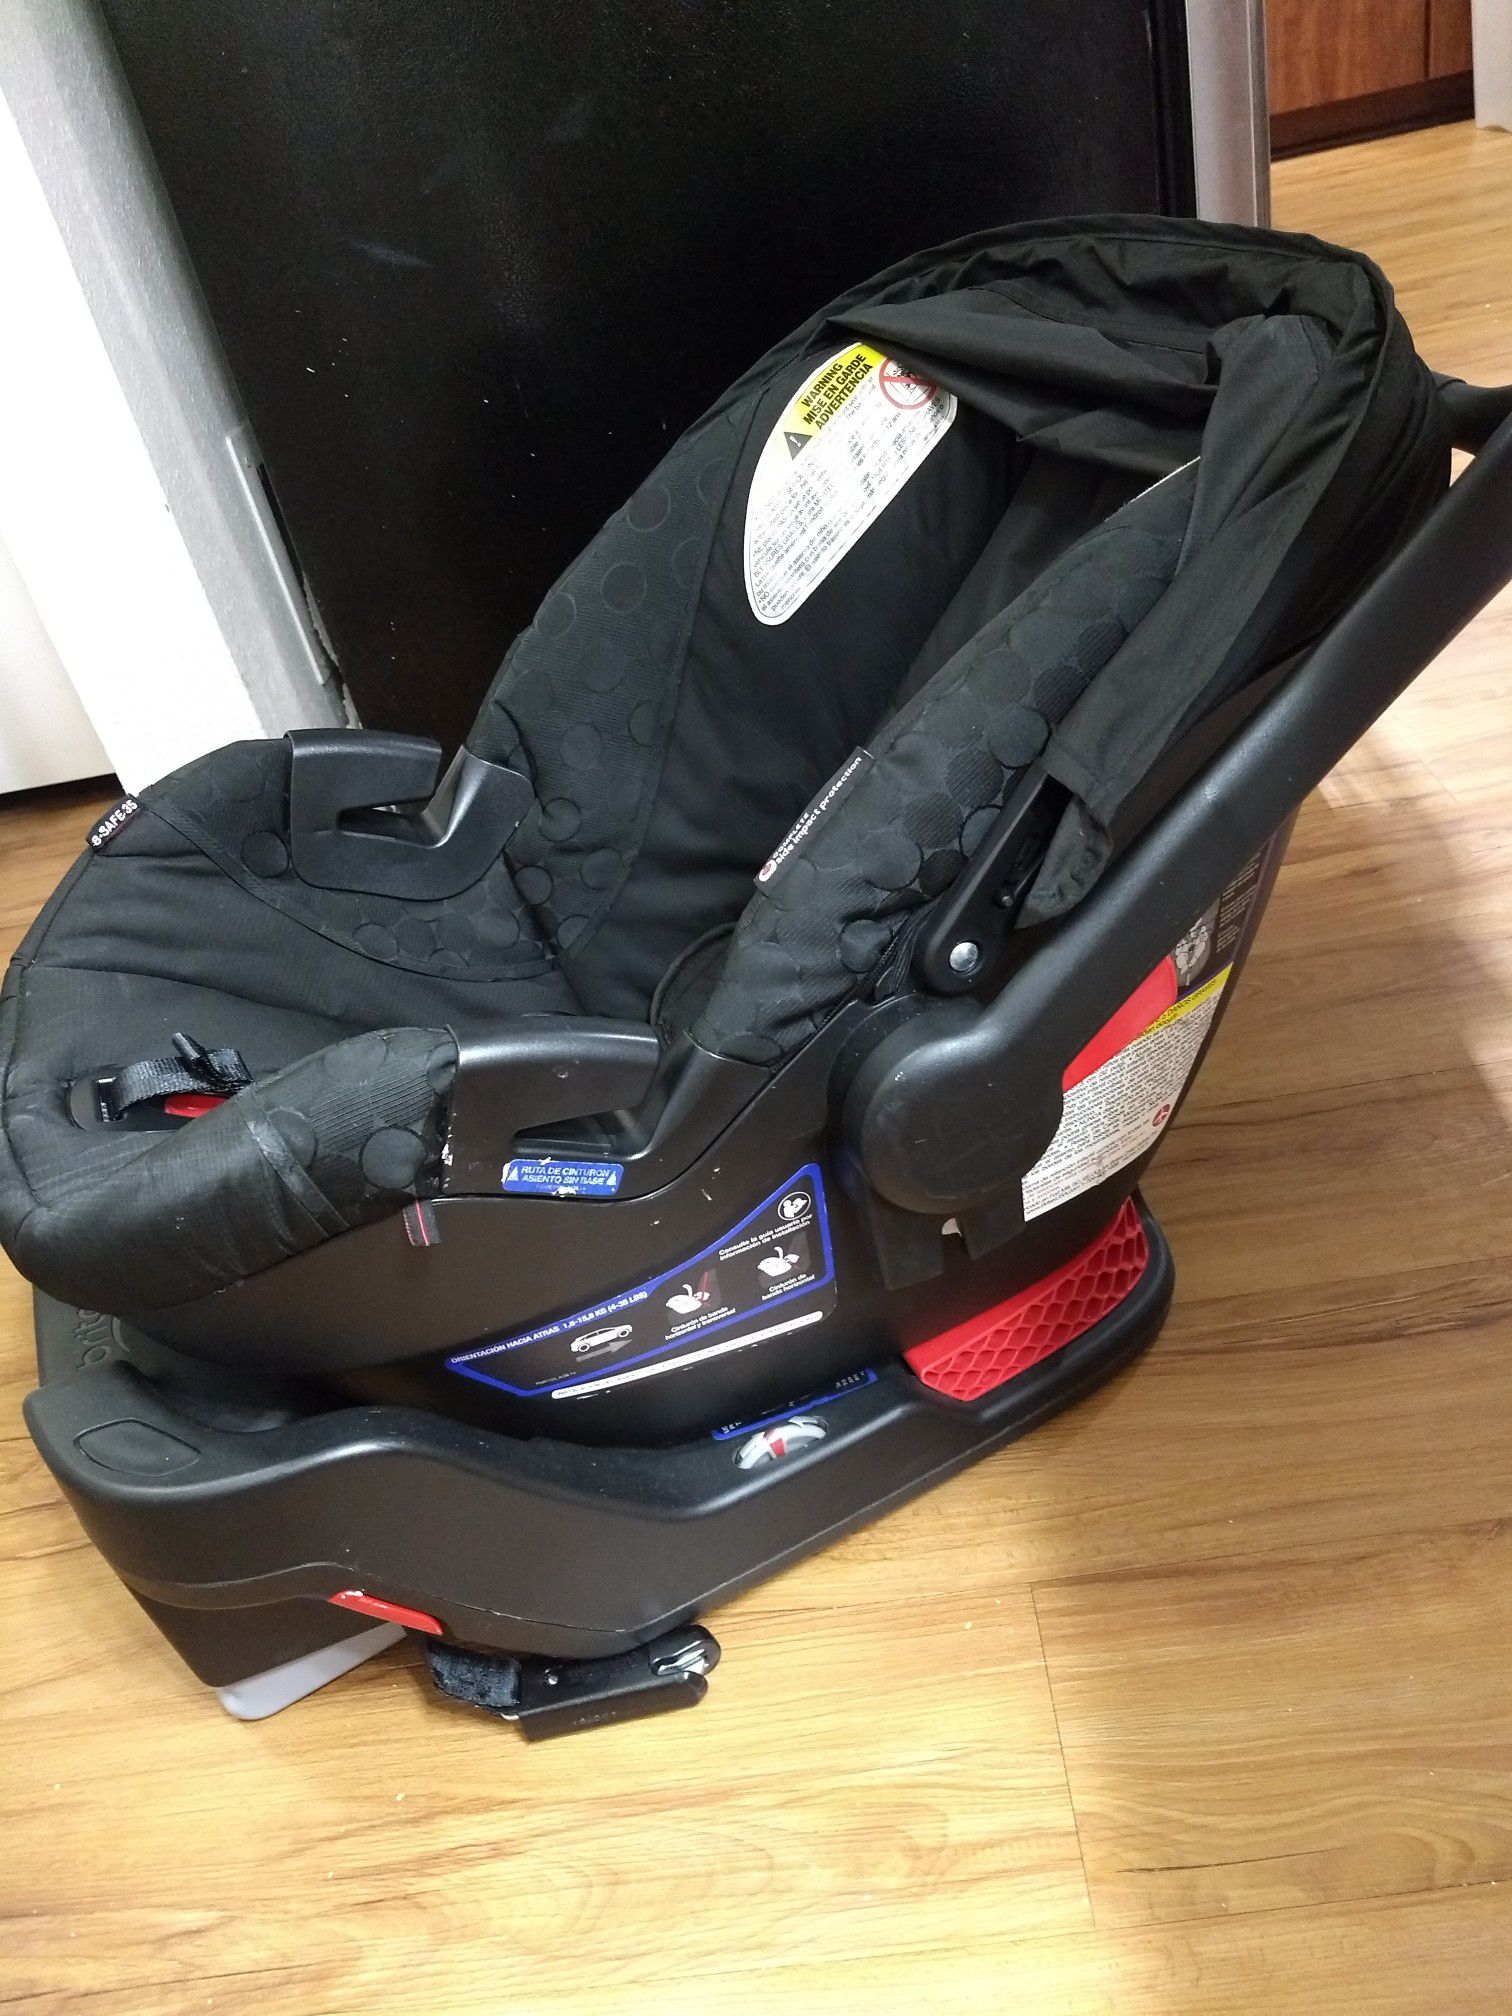 Britax infant car seat B-safe 35